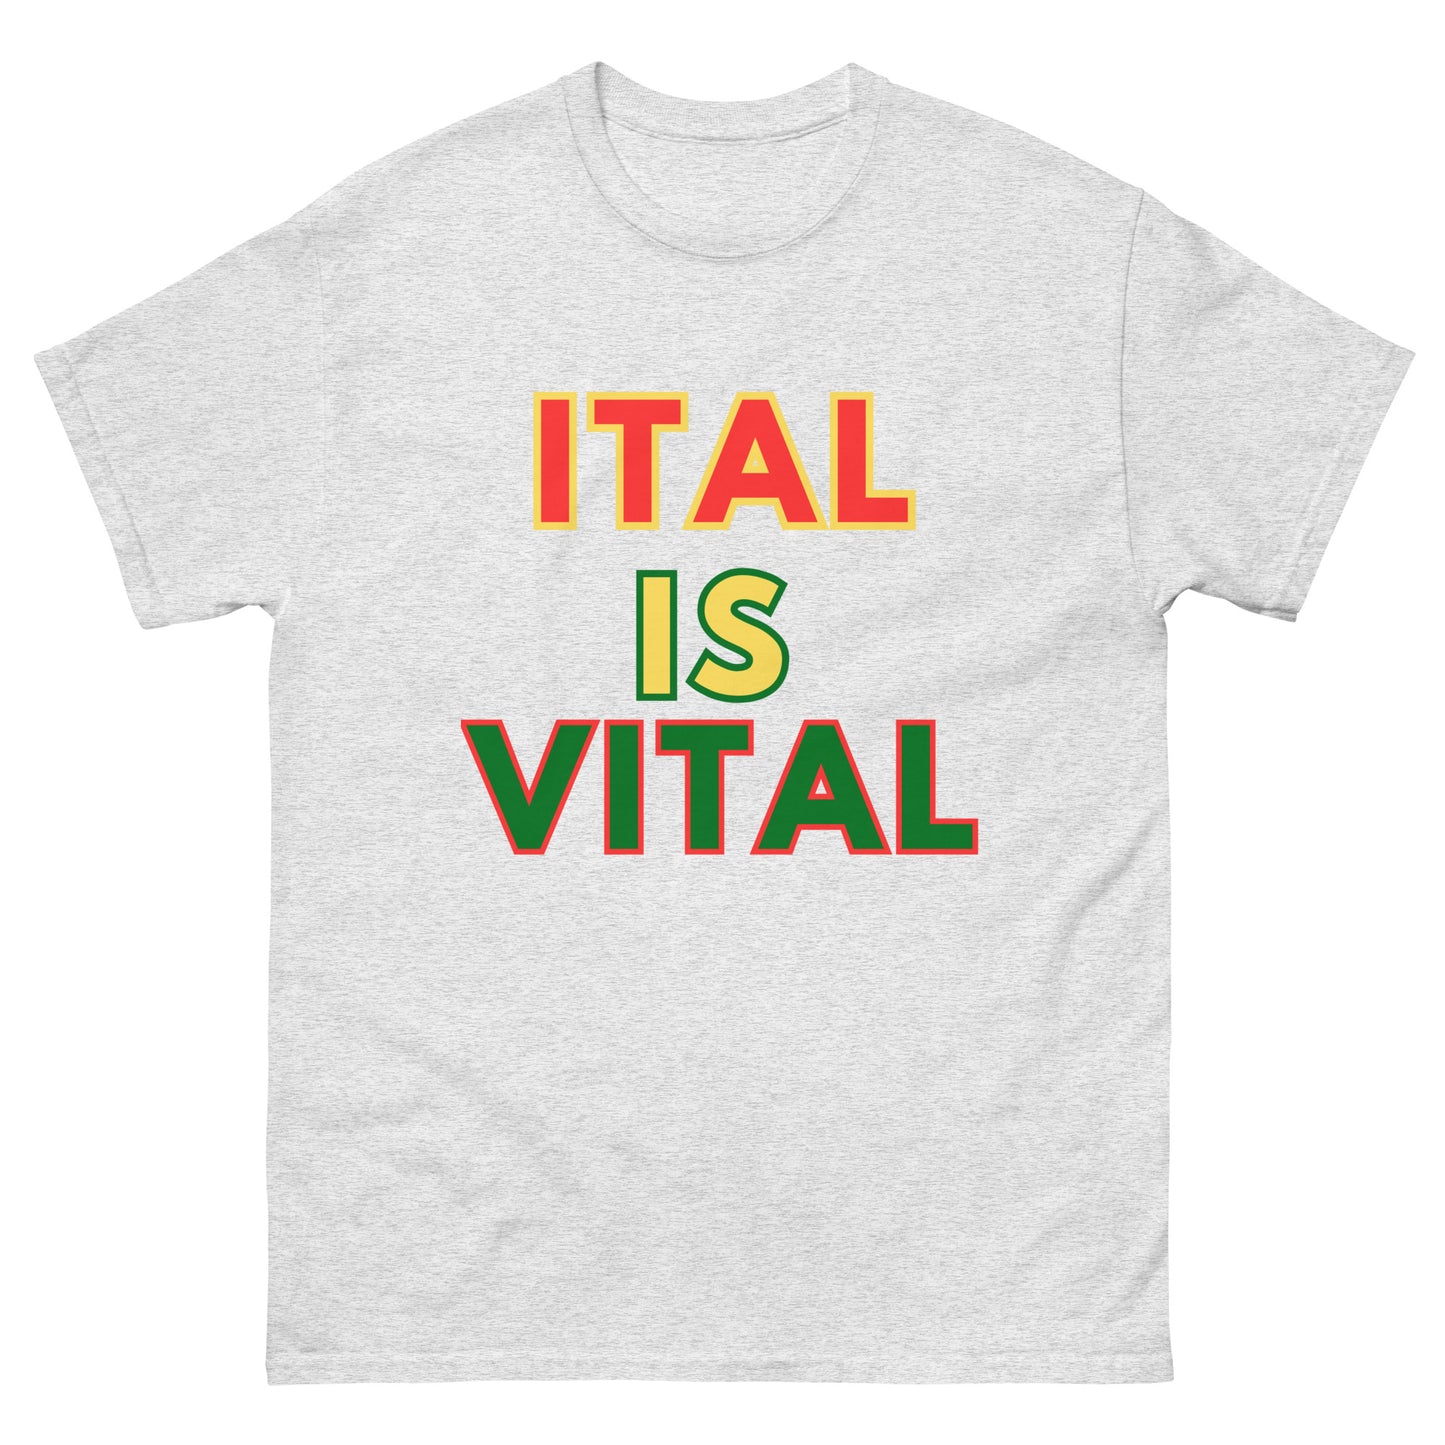 "Ital is Vital" Men's T-shirt